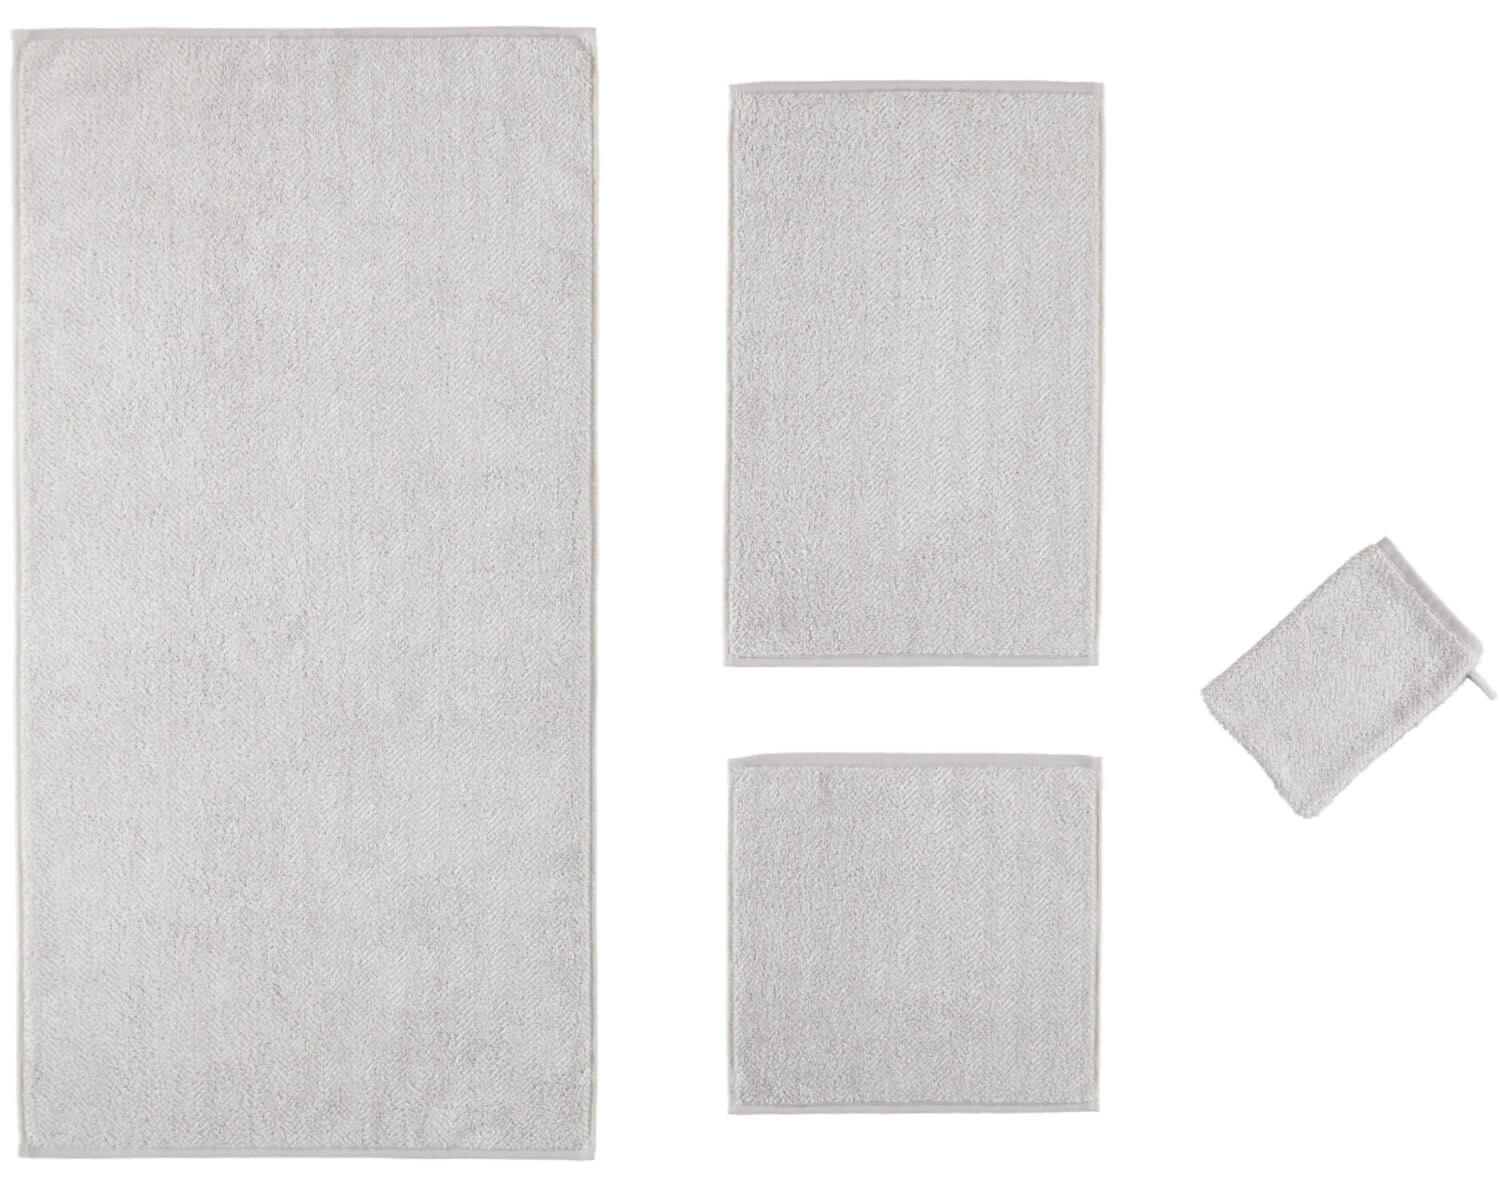 Махровое полотенце Contour Allover Silber ☞ Размер: 30 x 50 см